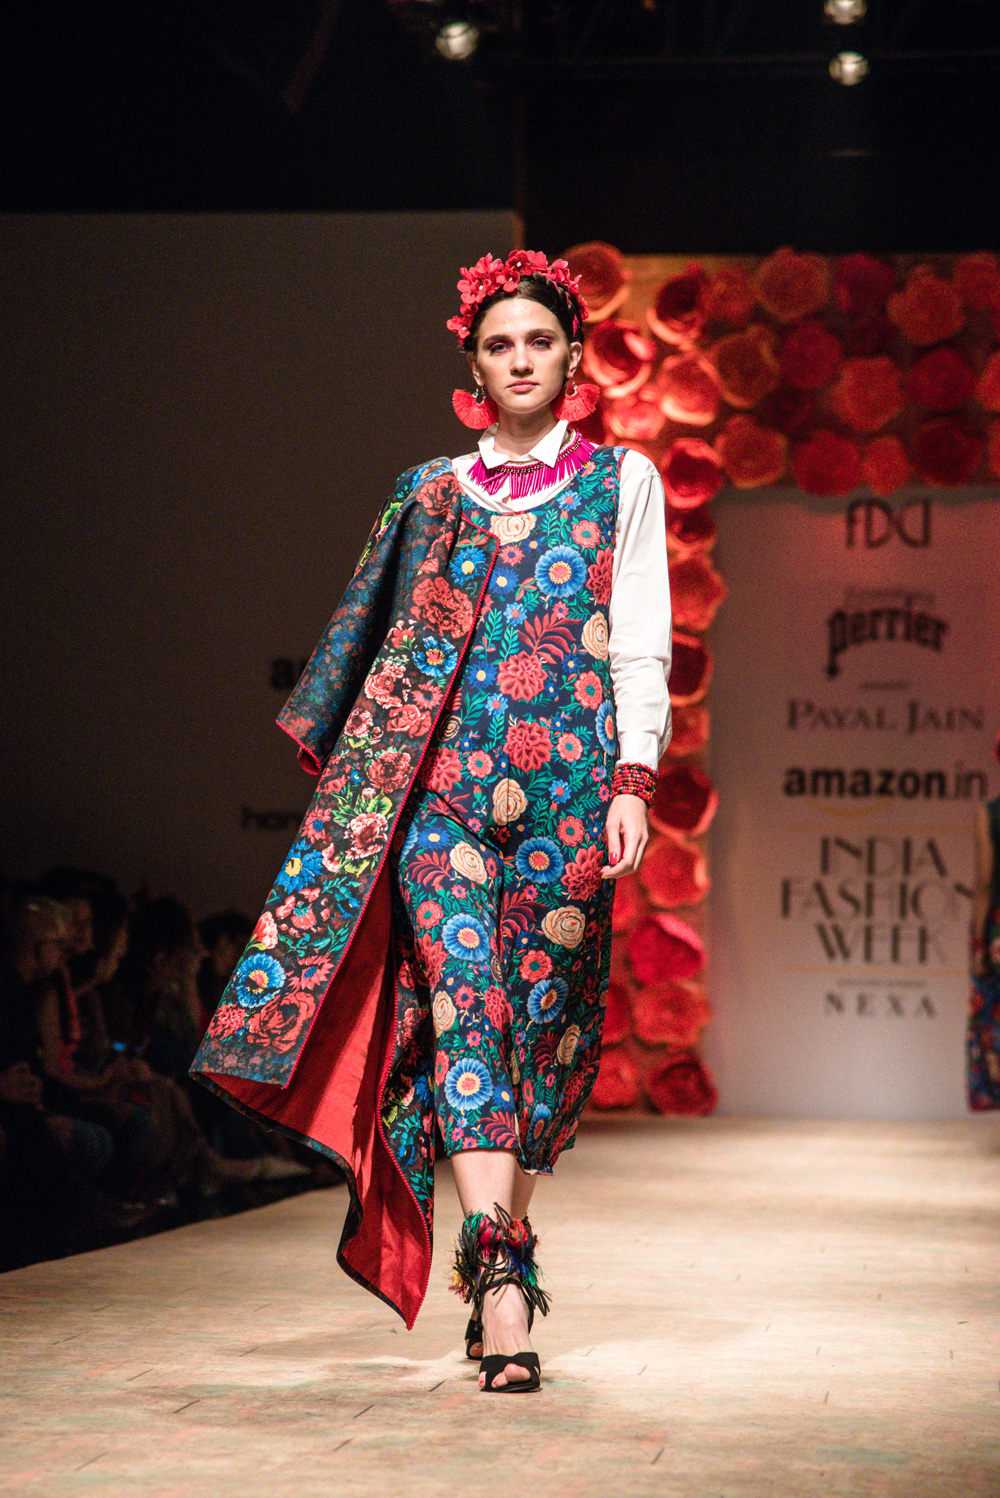 Payal Jain FDCI Amazon India Fashion Week Spring Summer 2018 Look 16